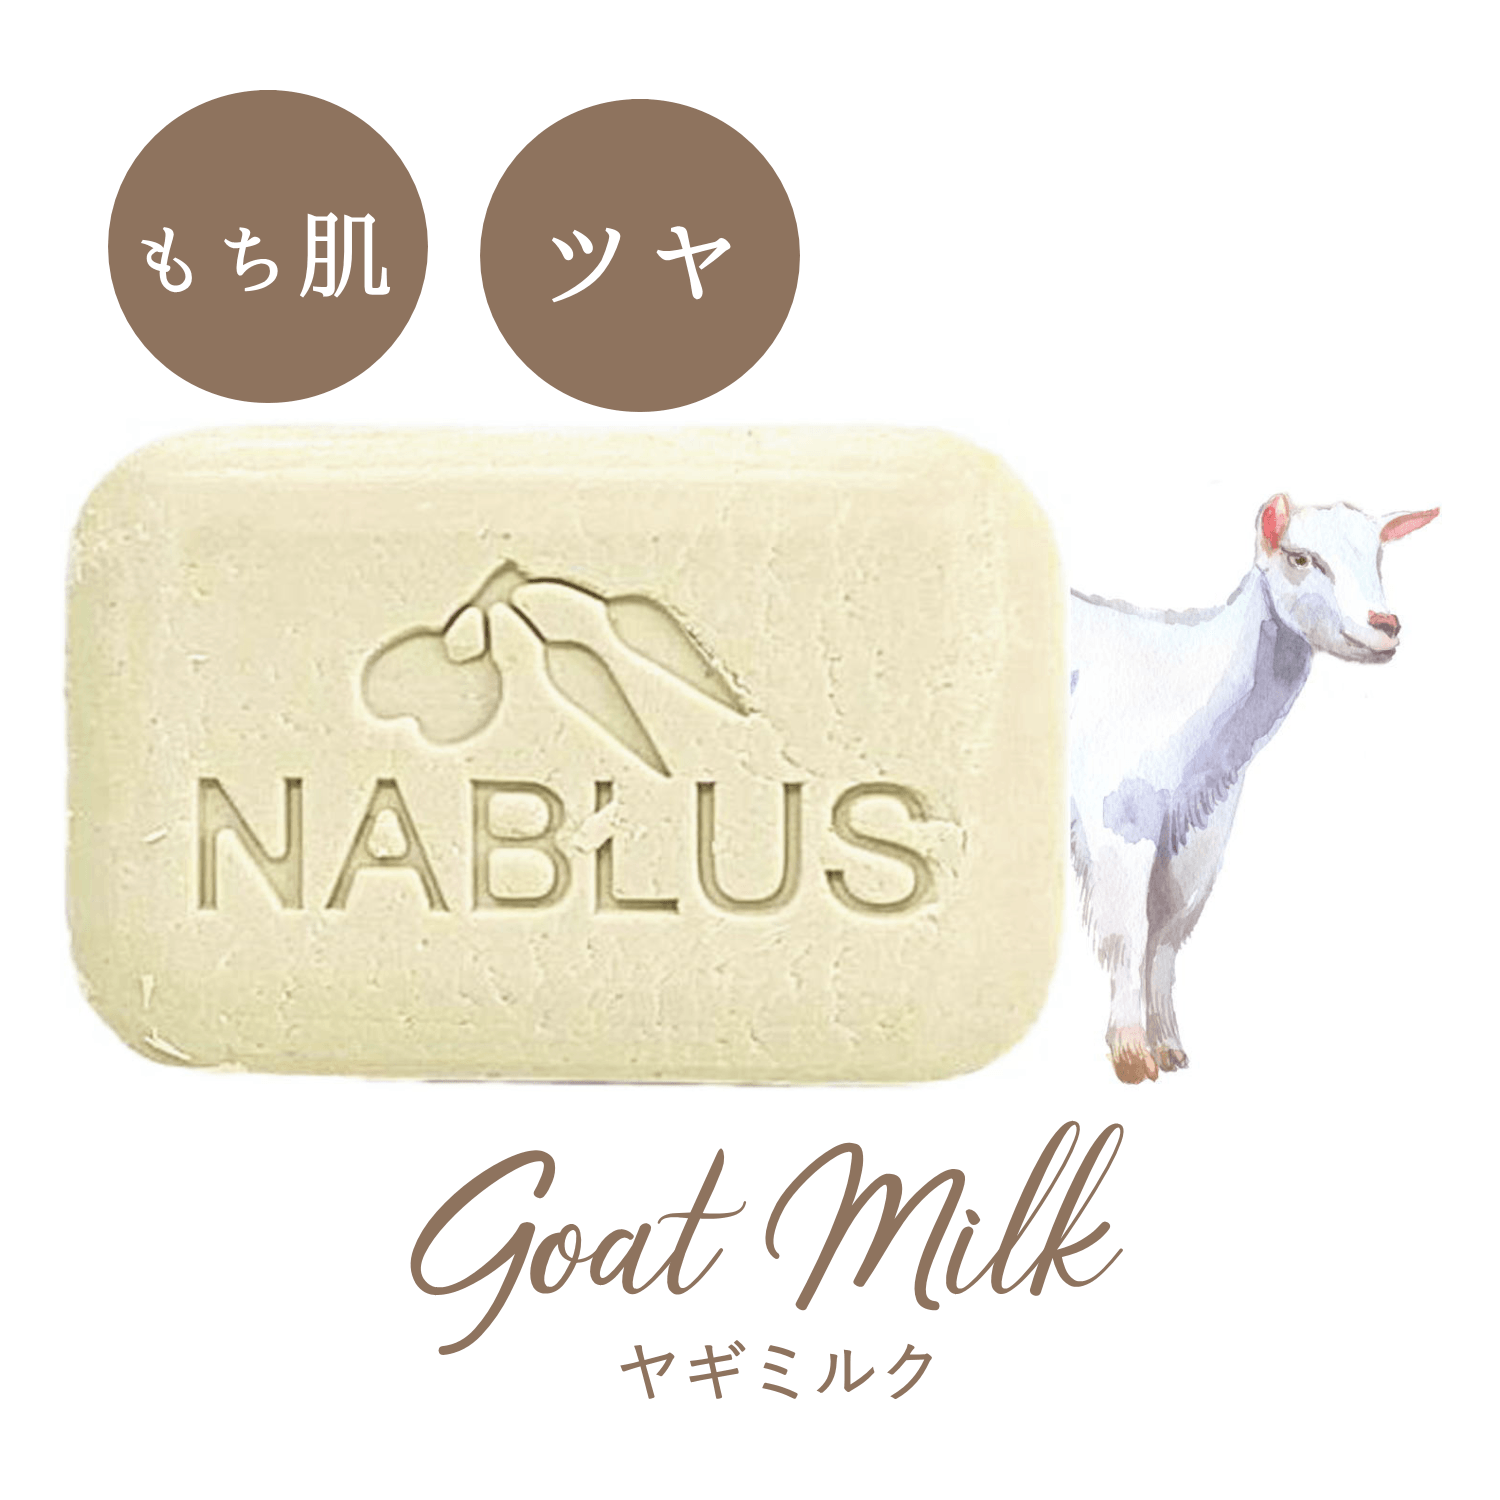 NABLUS SOAP ナーブルスソープ 無添加 完全オーガニック石鹸（ヤギミルク）もち肌・ツヤ 100g - YOUR ORGANICS